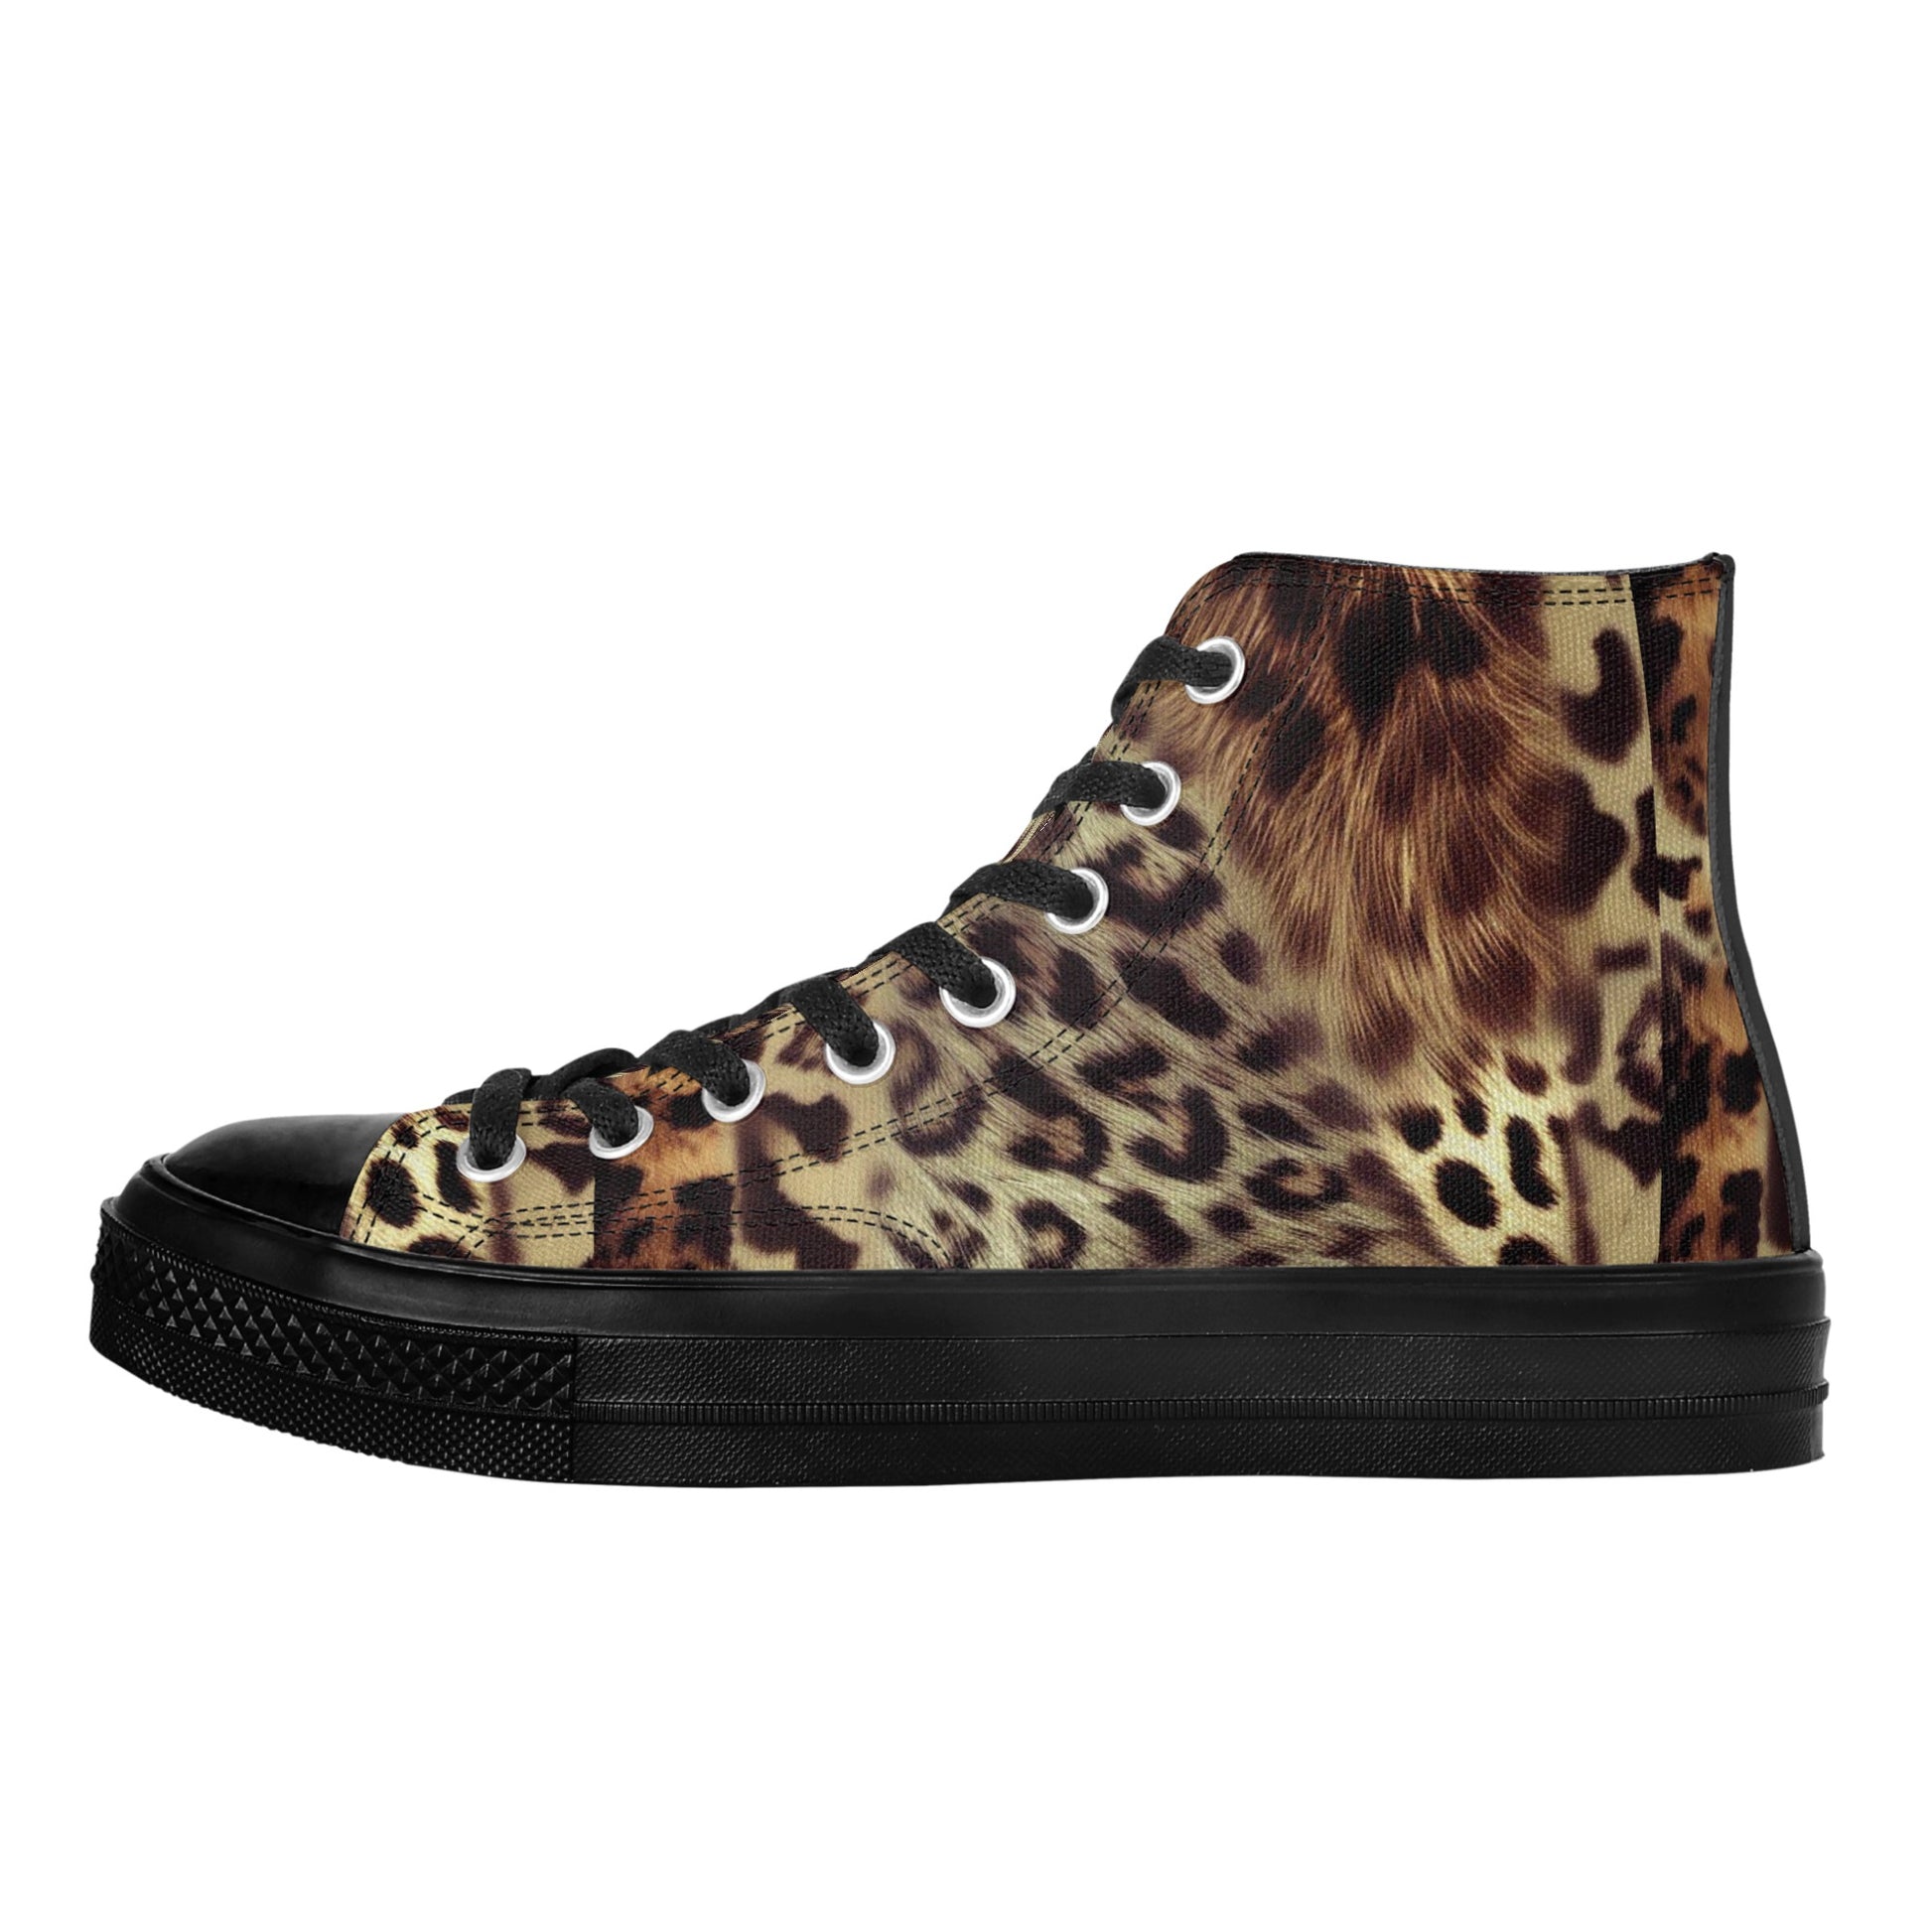 Wild Elegance: Canvas Shoes Featuring Striking Leopard Print Design